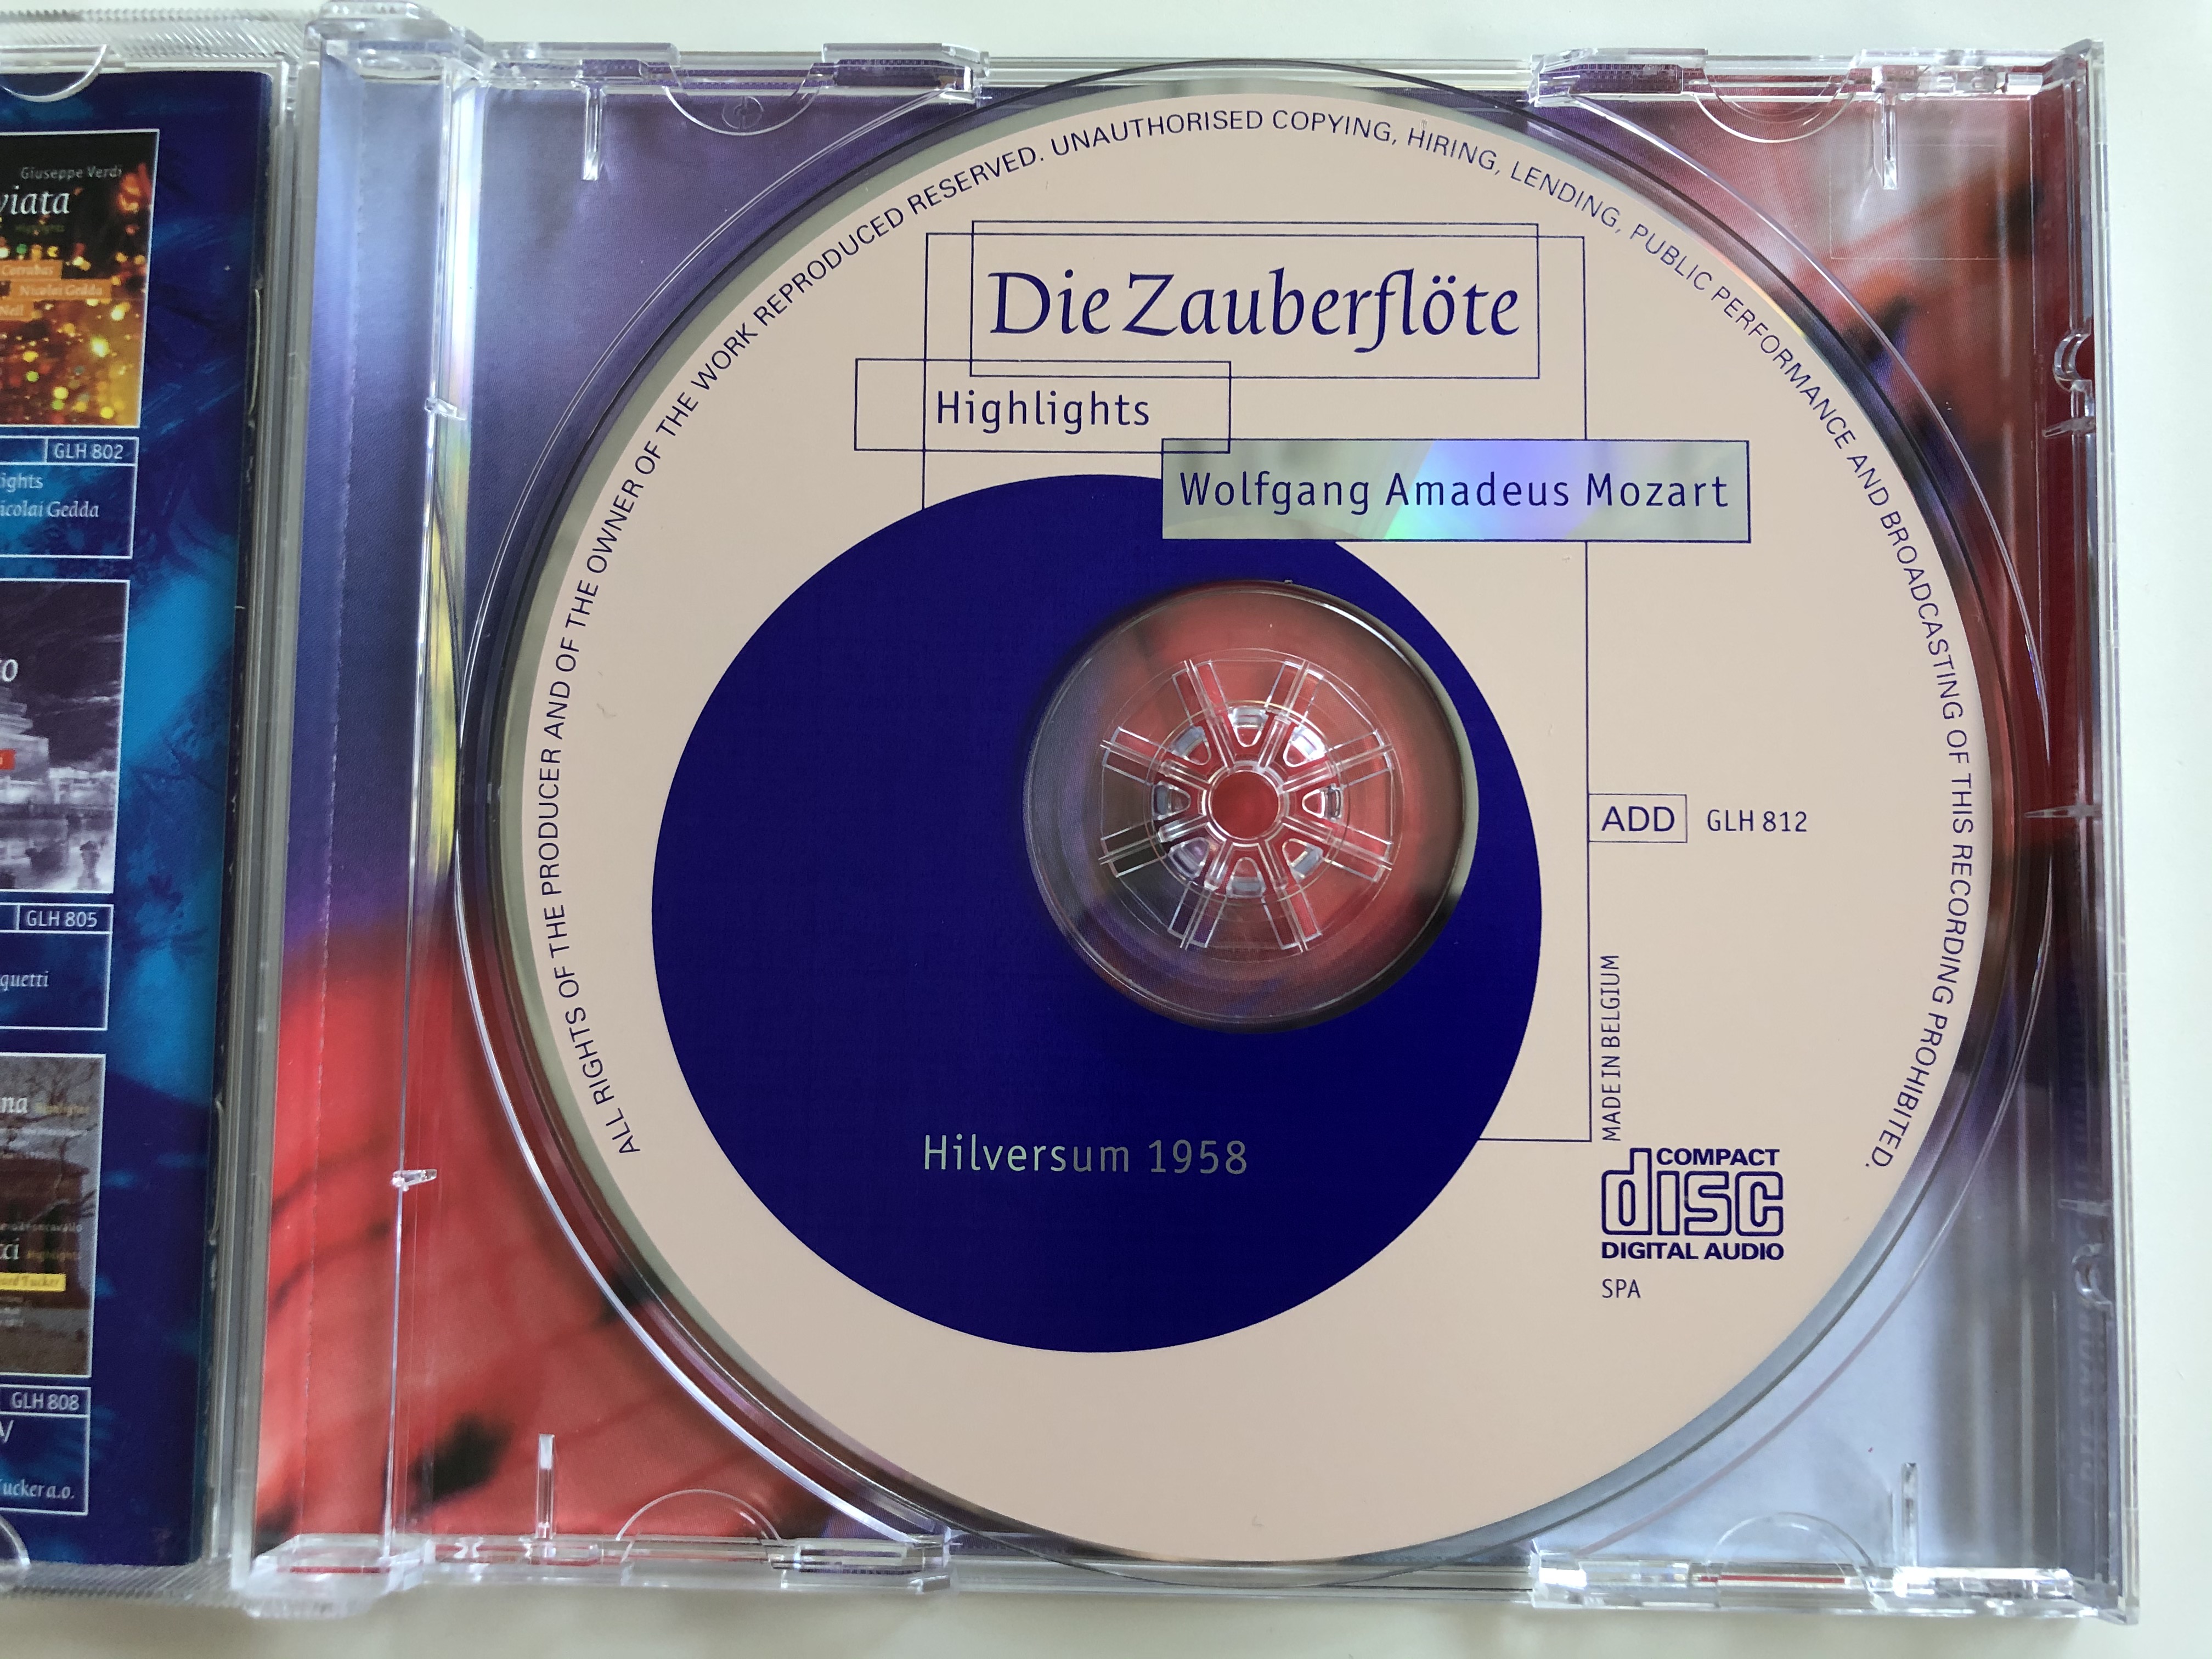 wolfgang-amadeus-mozart-die-zauberflote-highlights-fritz-wunderlich-jan-derksen-omroepkoor-omroeporkest-bernard-haitink-hilversum-1958-hilversum-audio-cd-1958-glh-812-6-.jpg